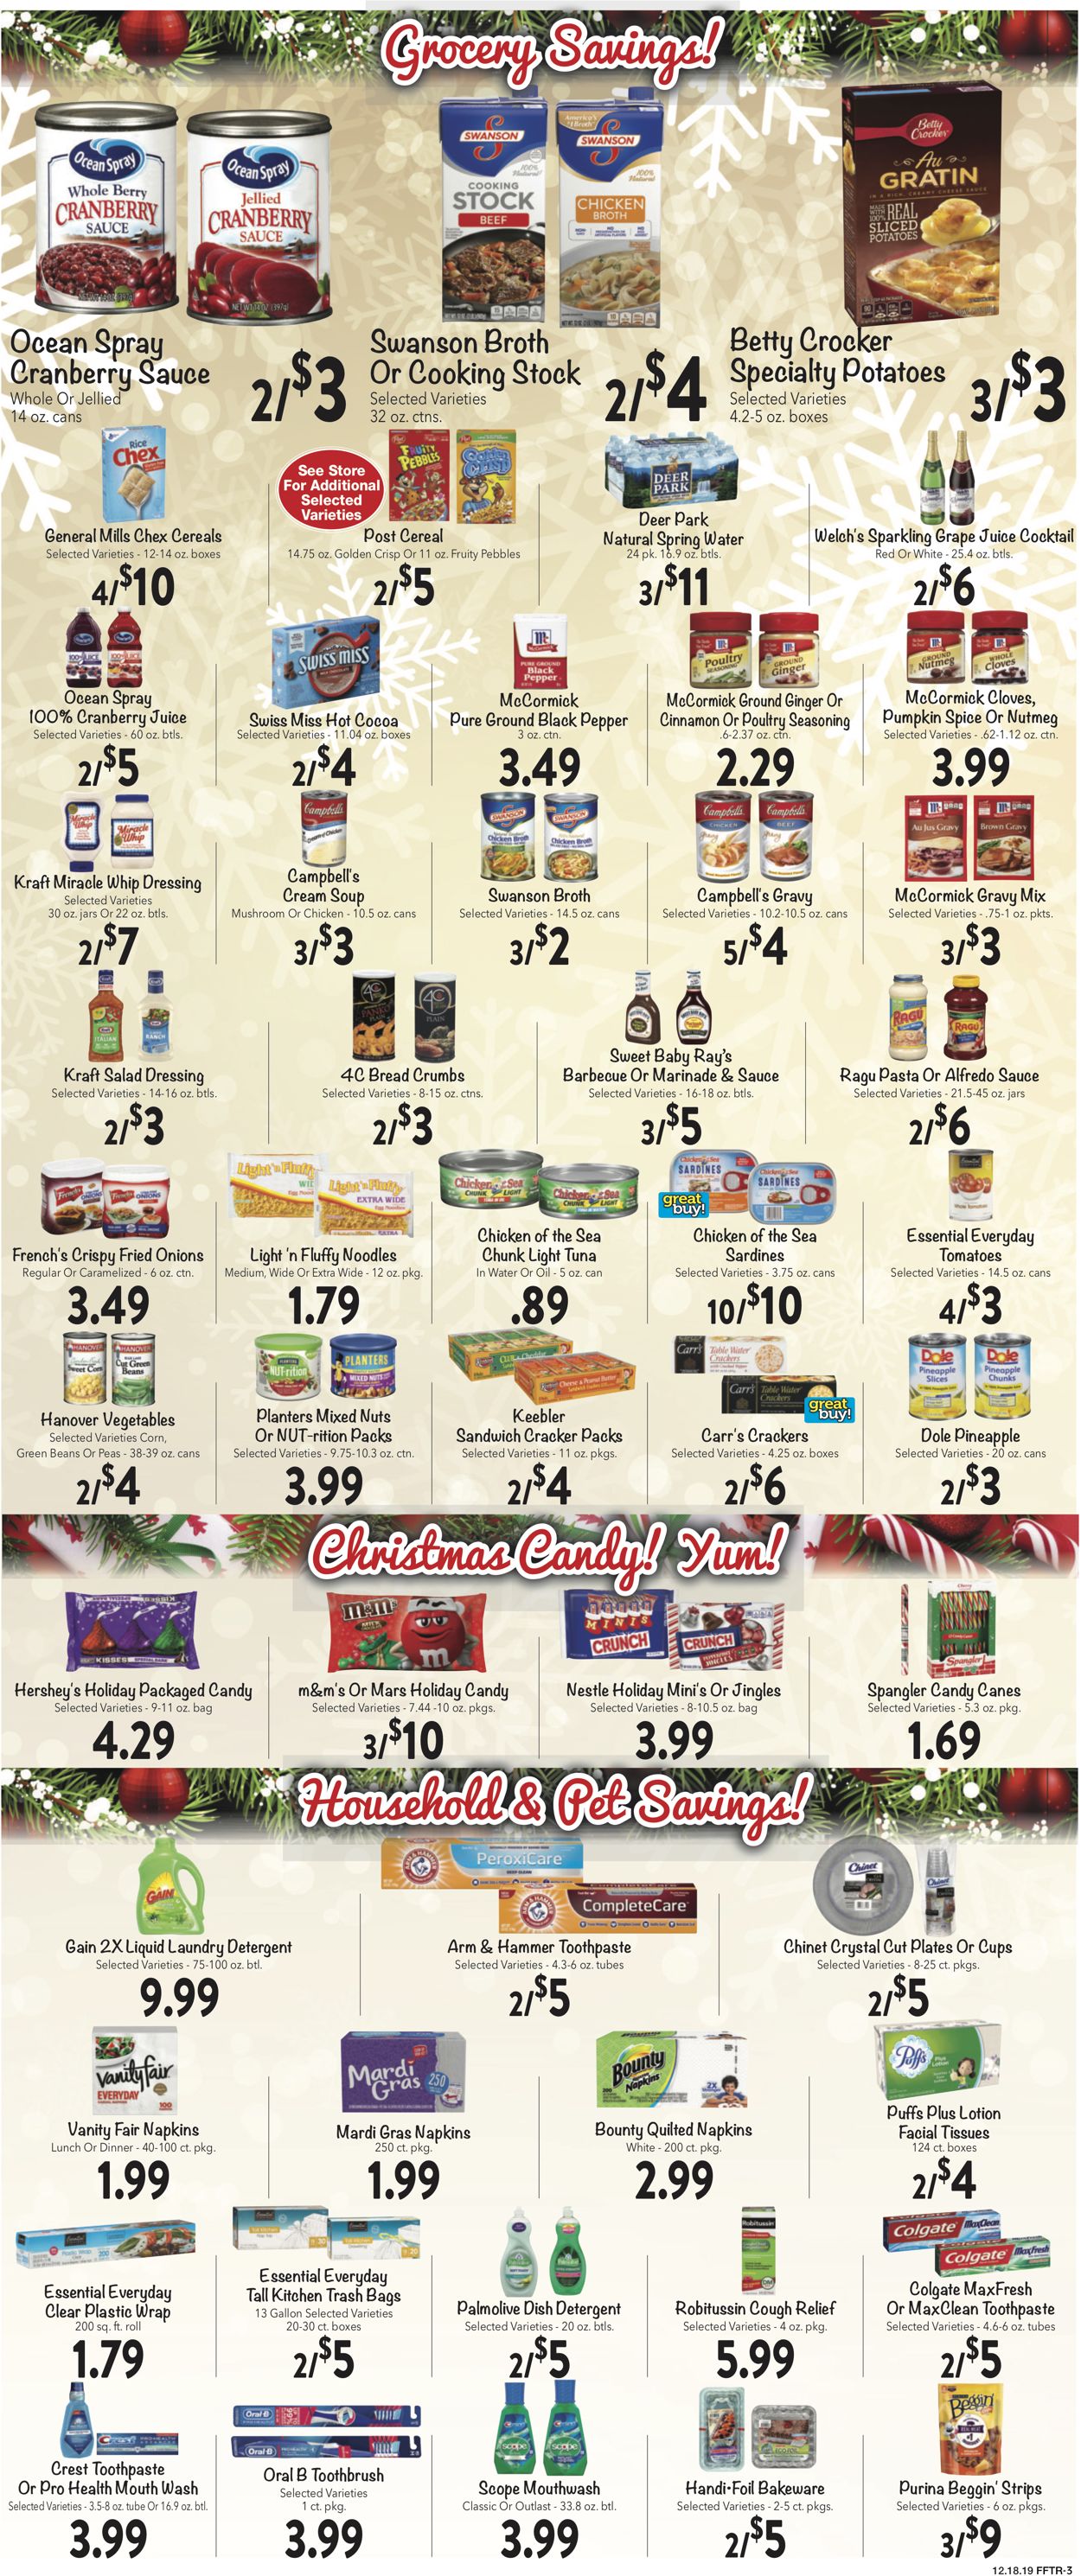 Catalogue Farm Fresh - Christmas Ad 2019 from 12/18/2019